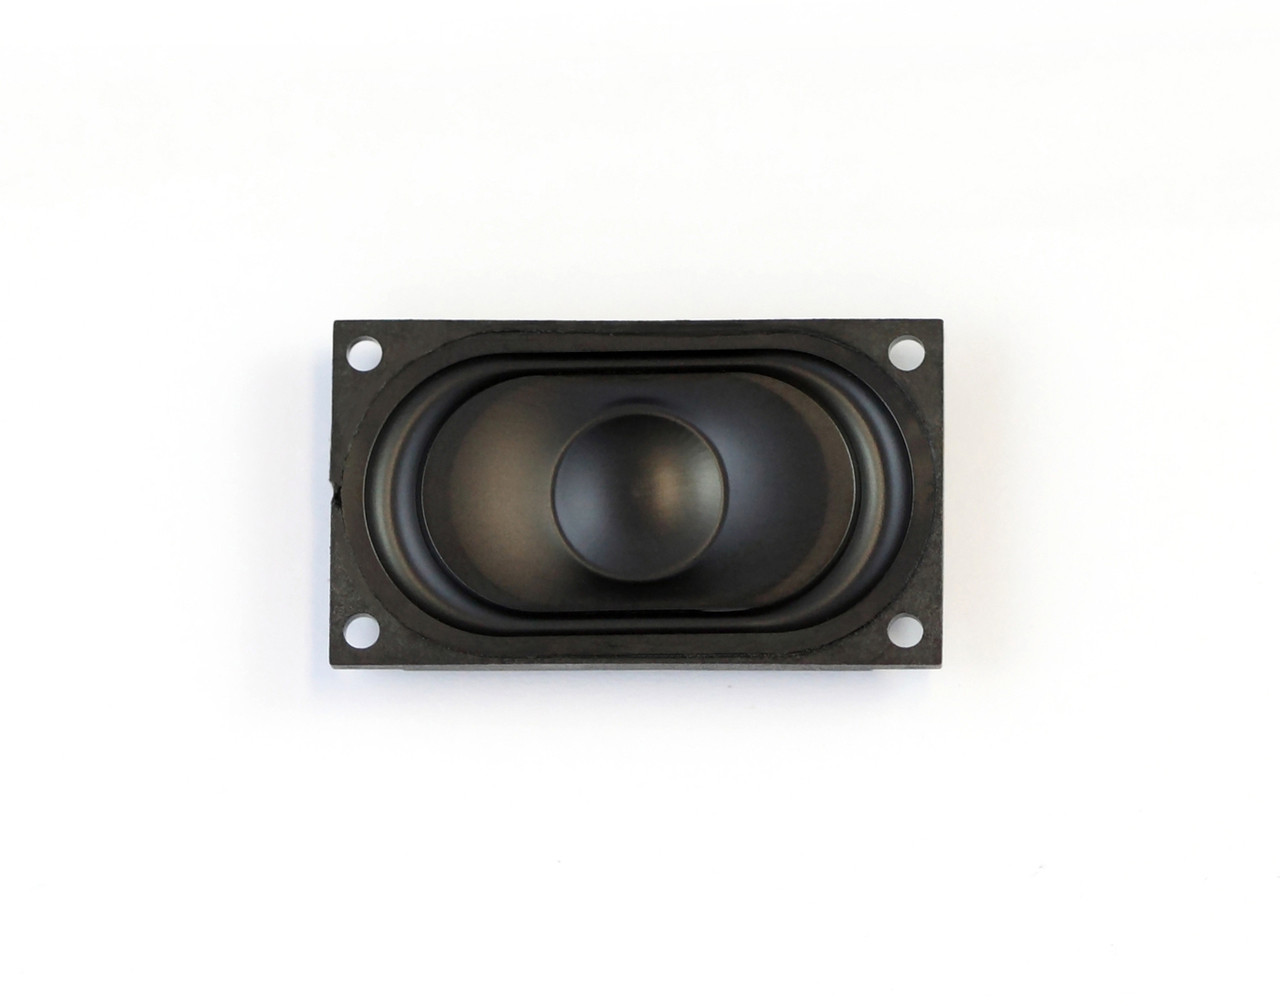 Soundtraxx 35x20 mm Oval Speaker #810115 8 ohm